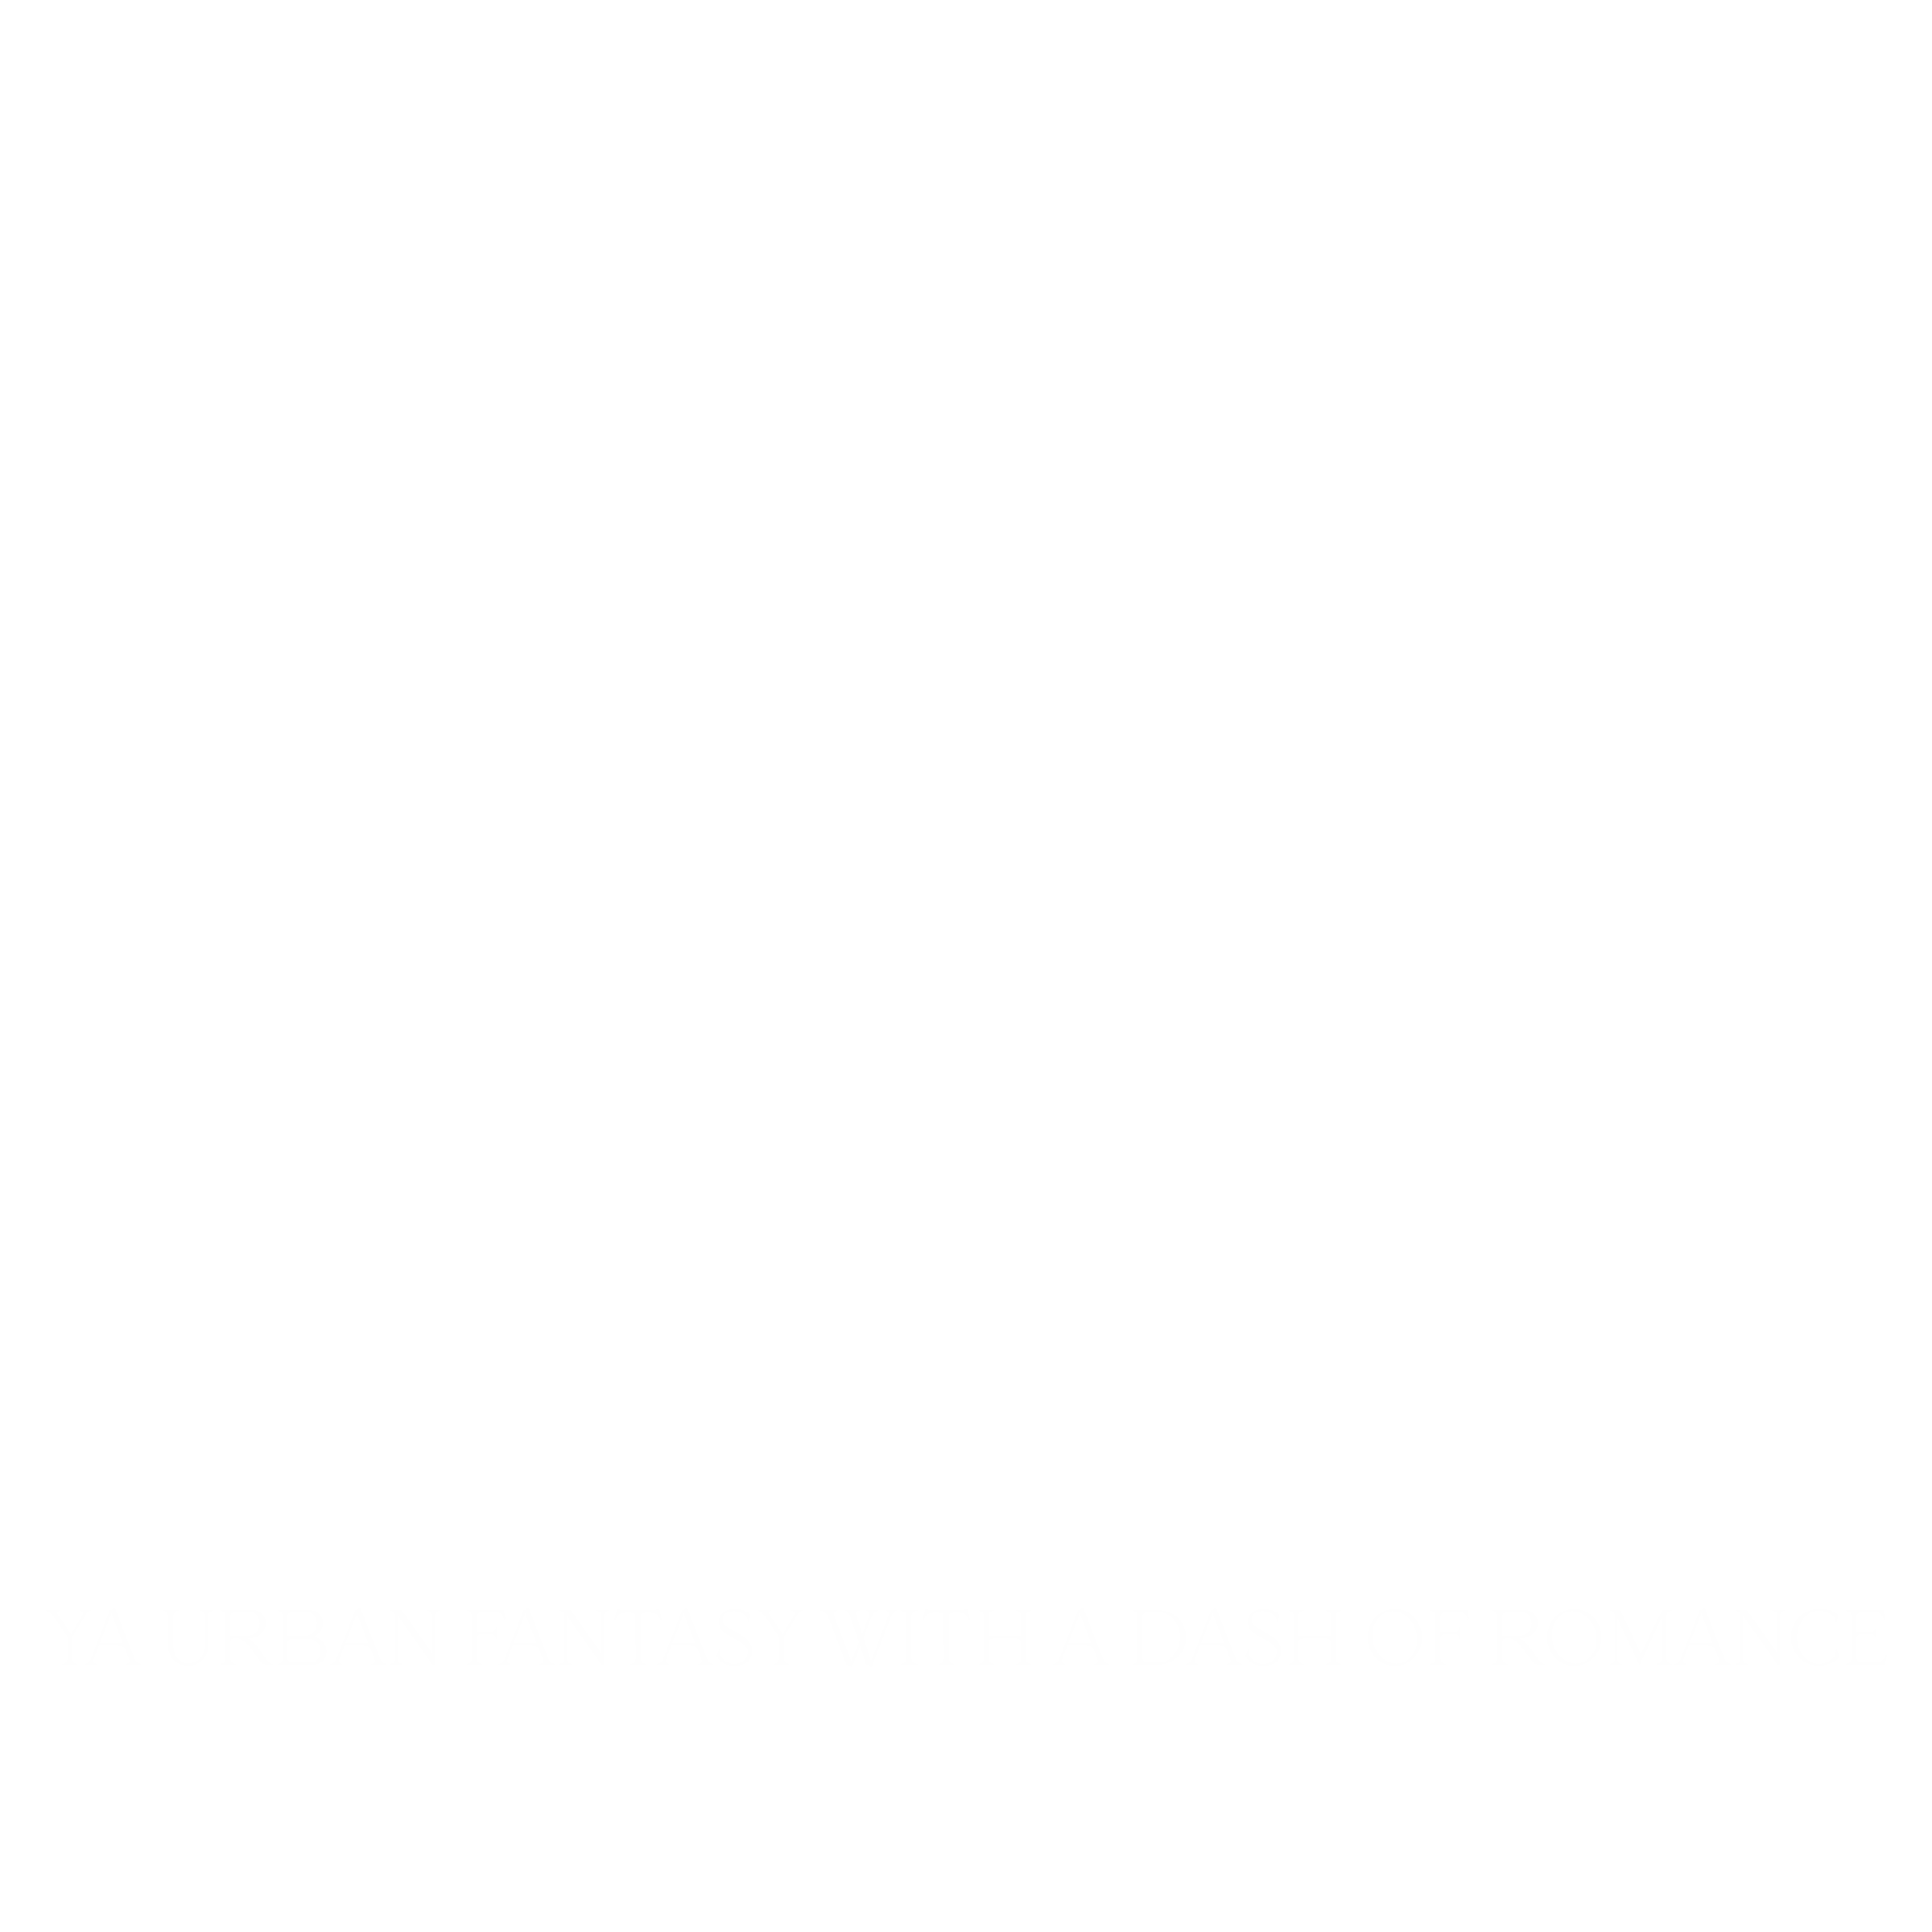 Aleah Raynes